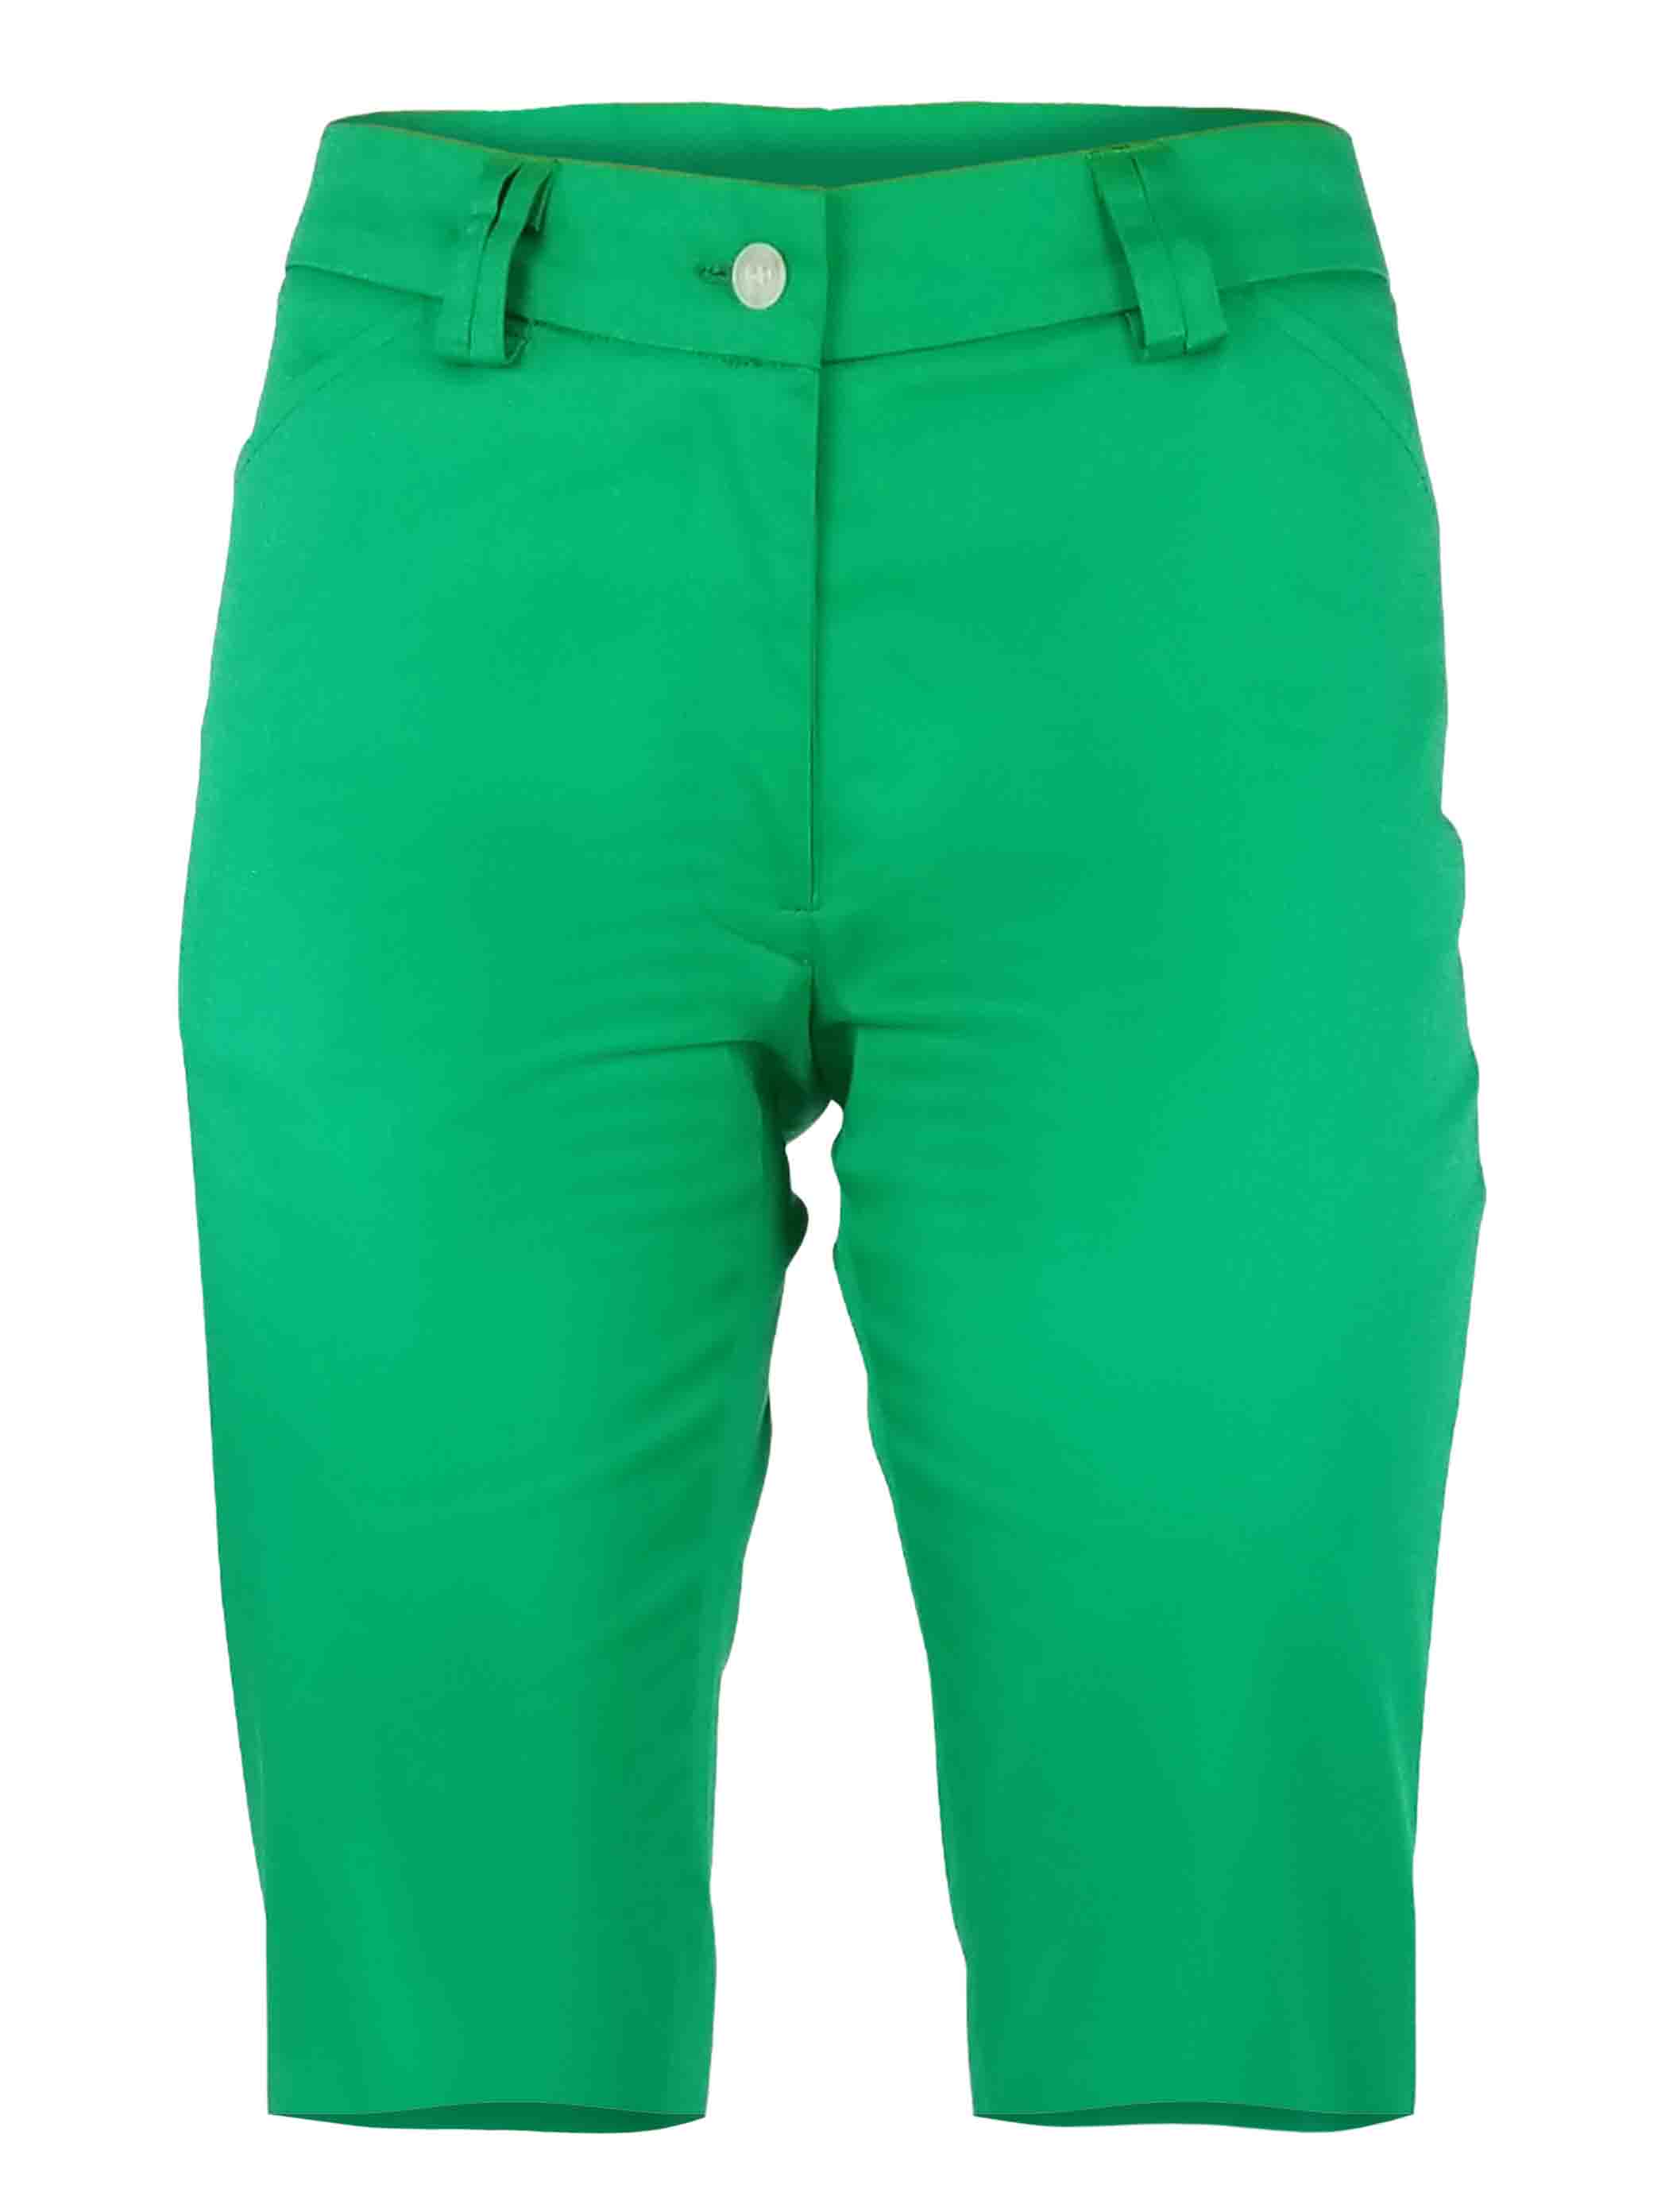 Women's Shorts - Green - Uniform Edit